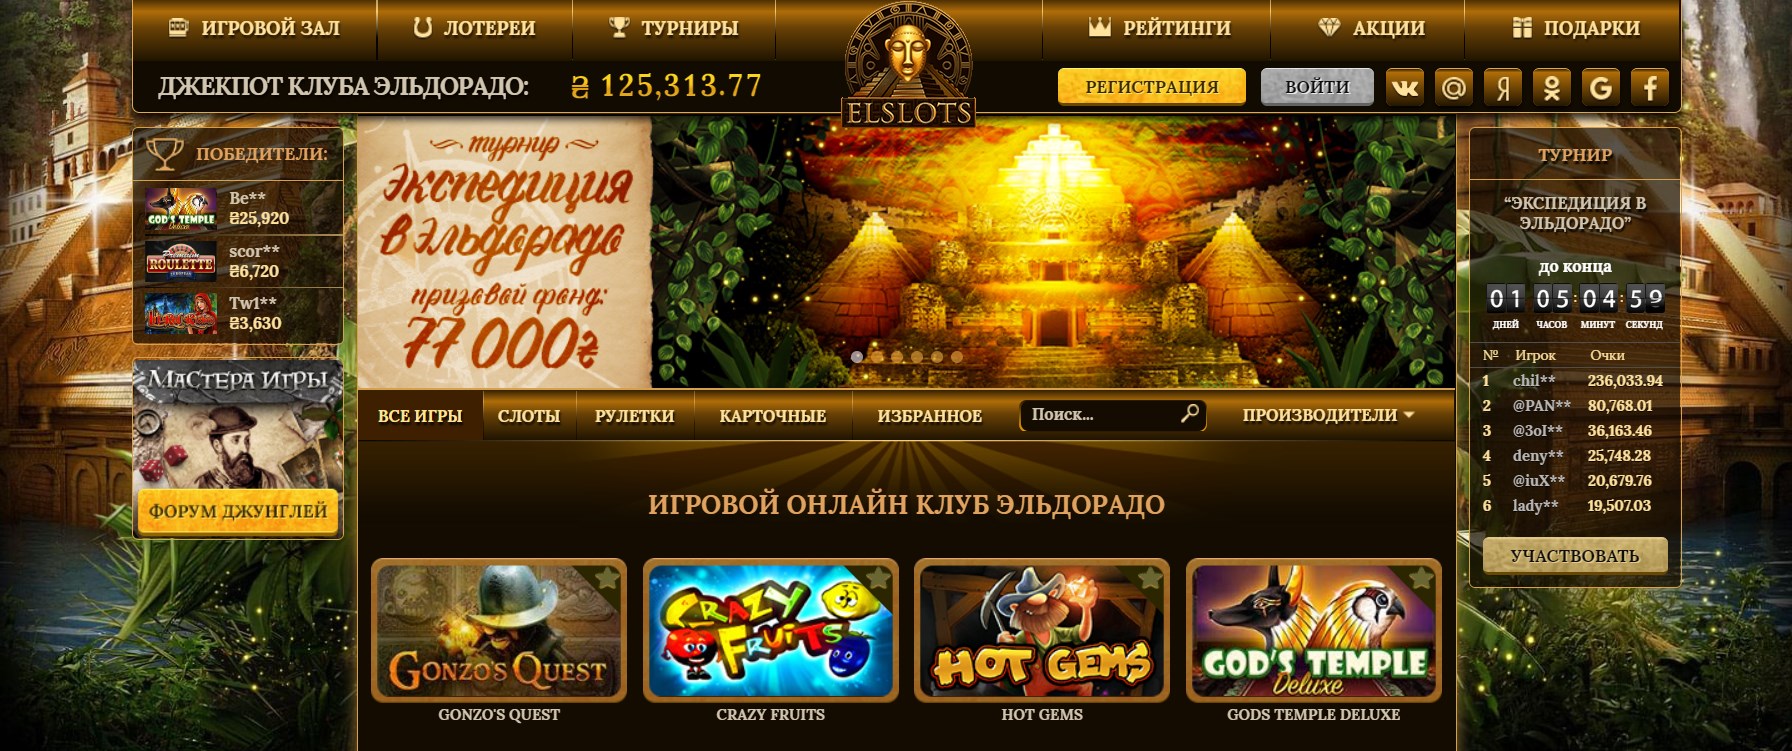 эльдорадо казино онлайн официальный сайт эльдорадо